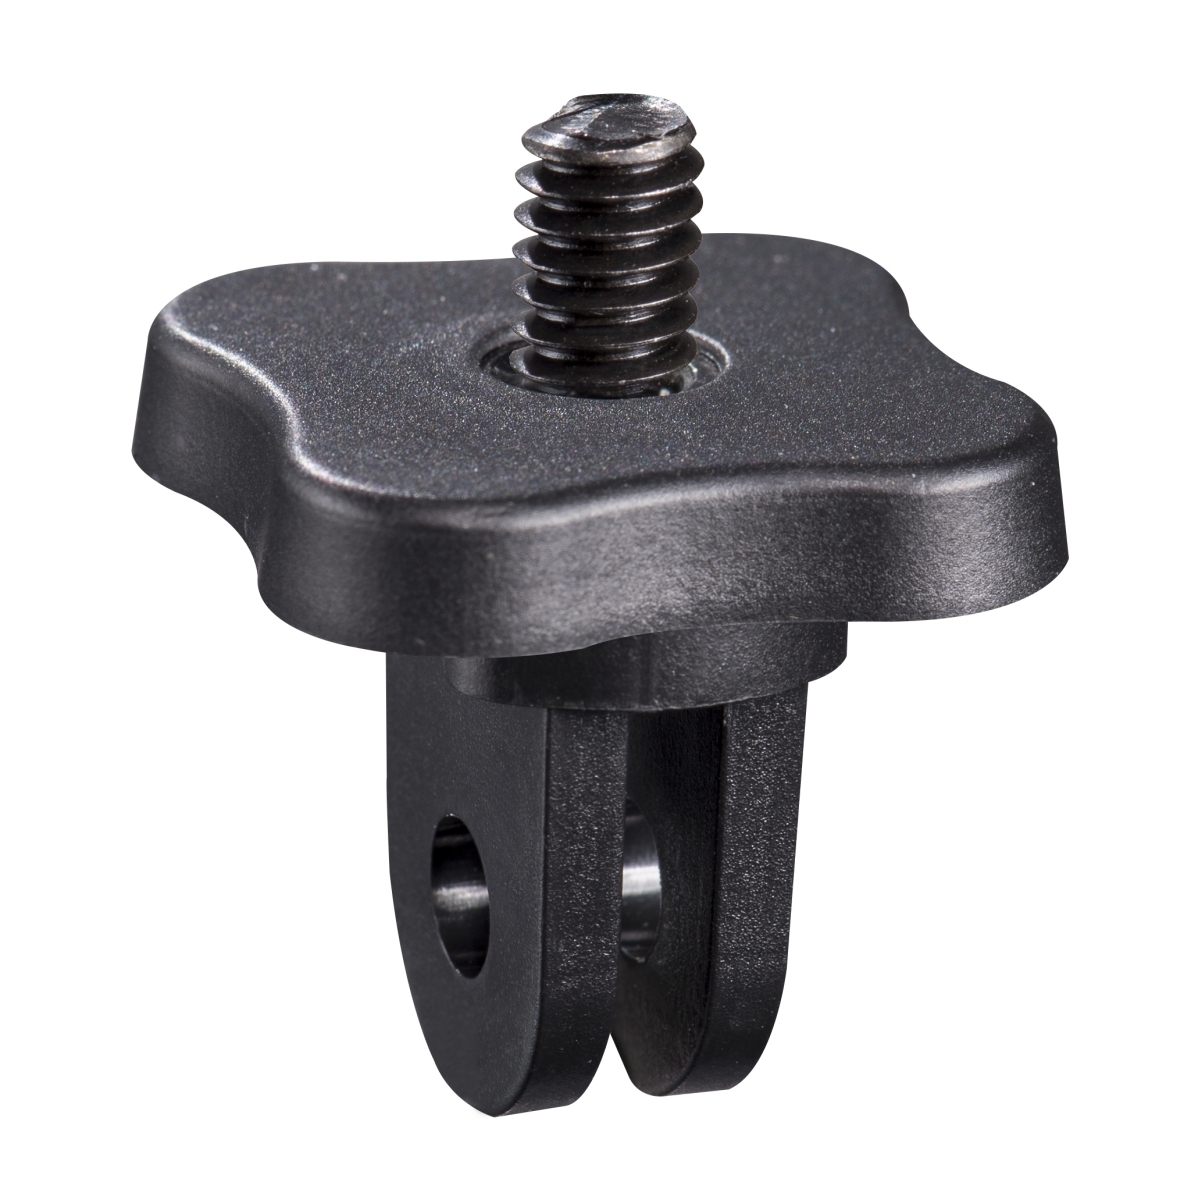 Mantona 1/4 inch adapter screw to GoPro mount